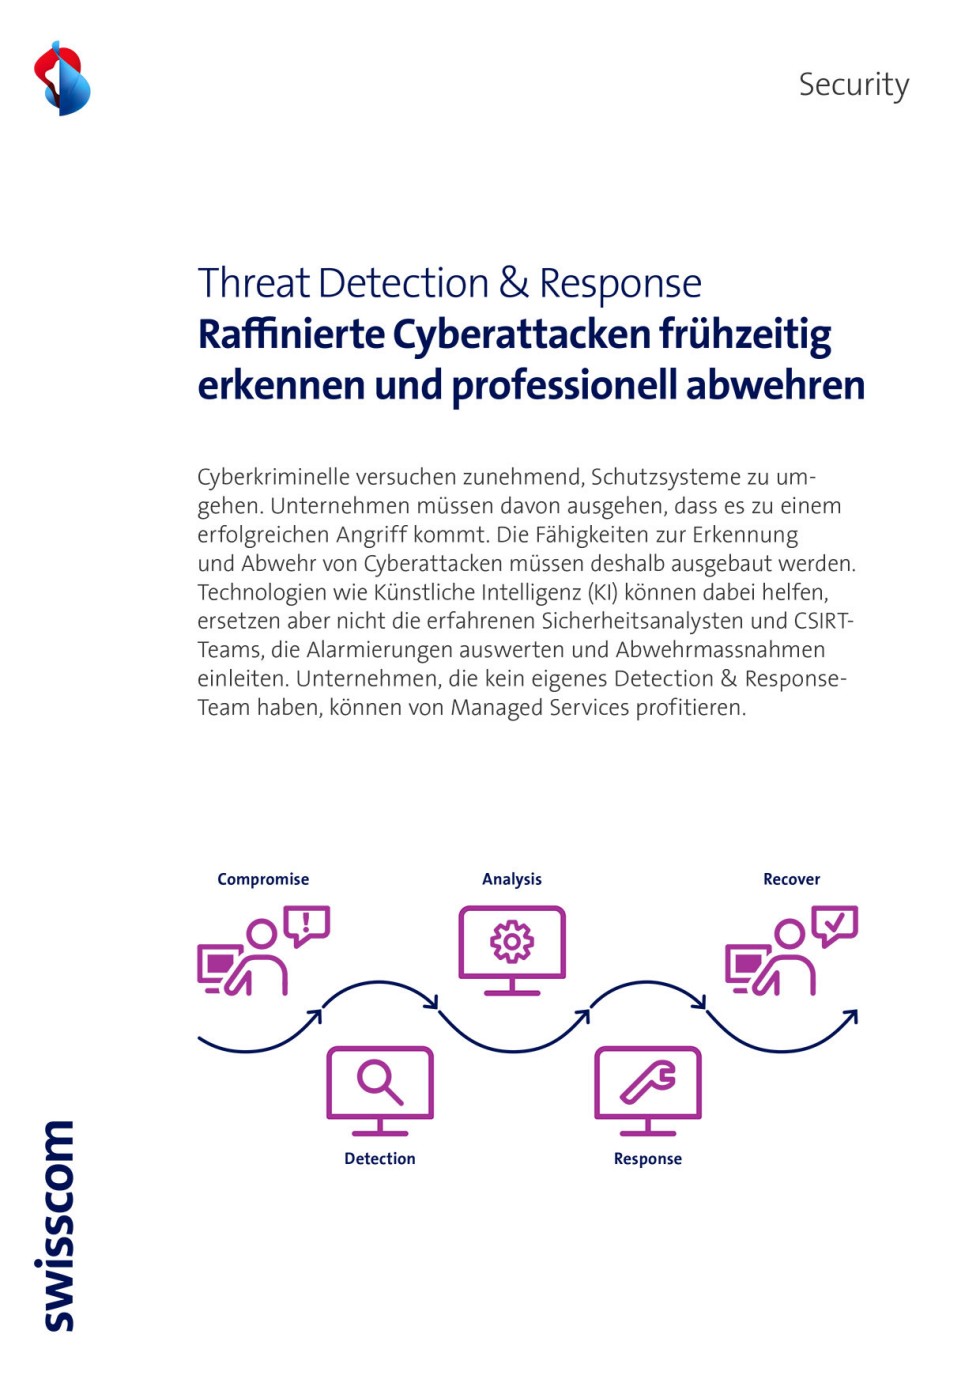 Titelbild des Infopaketes: Threat Detection and Response